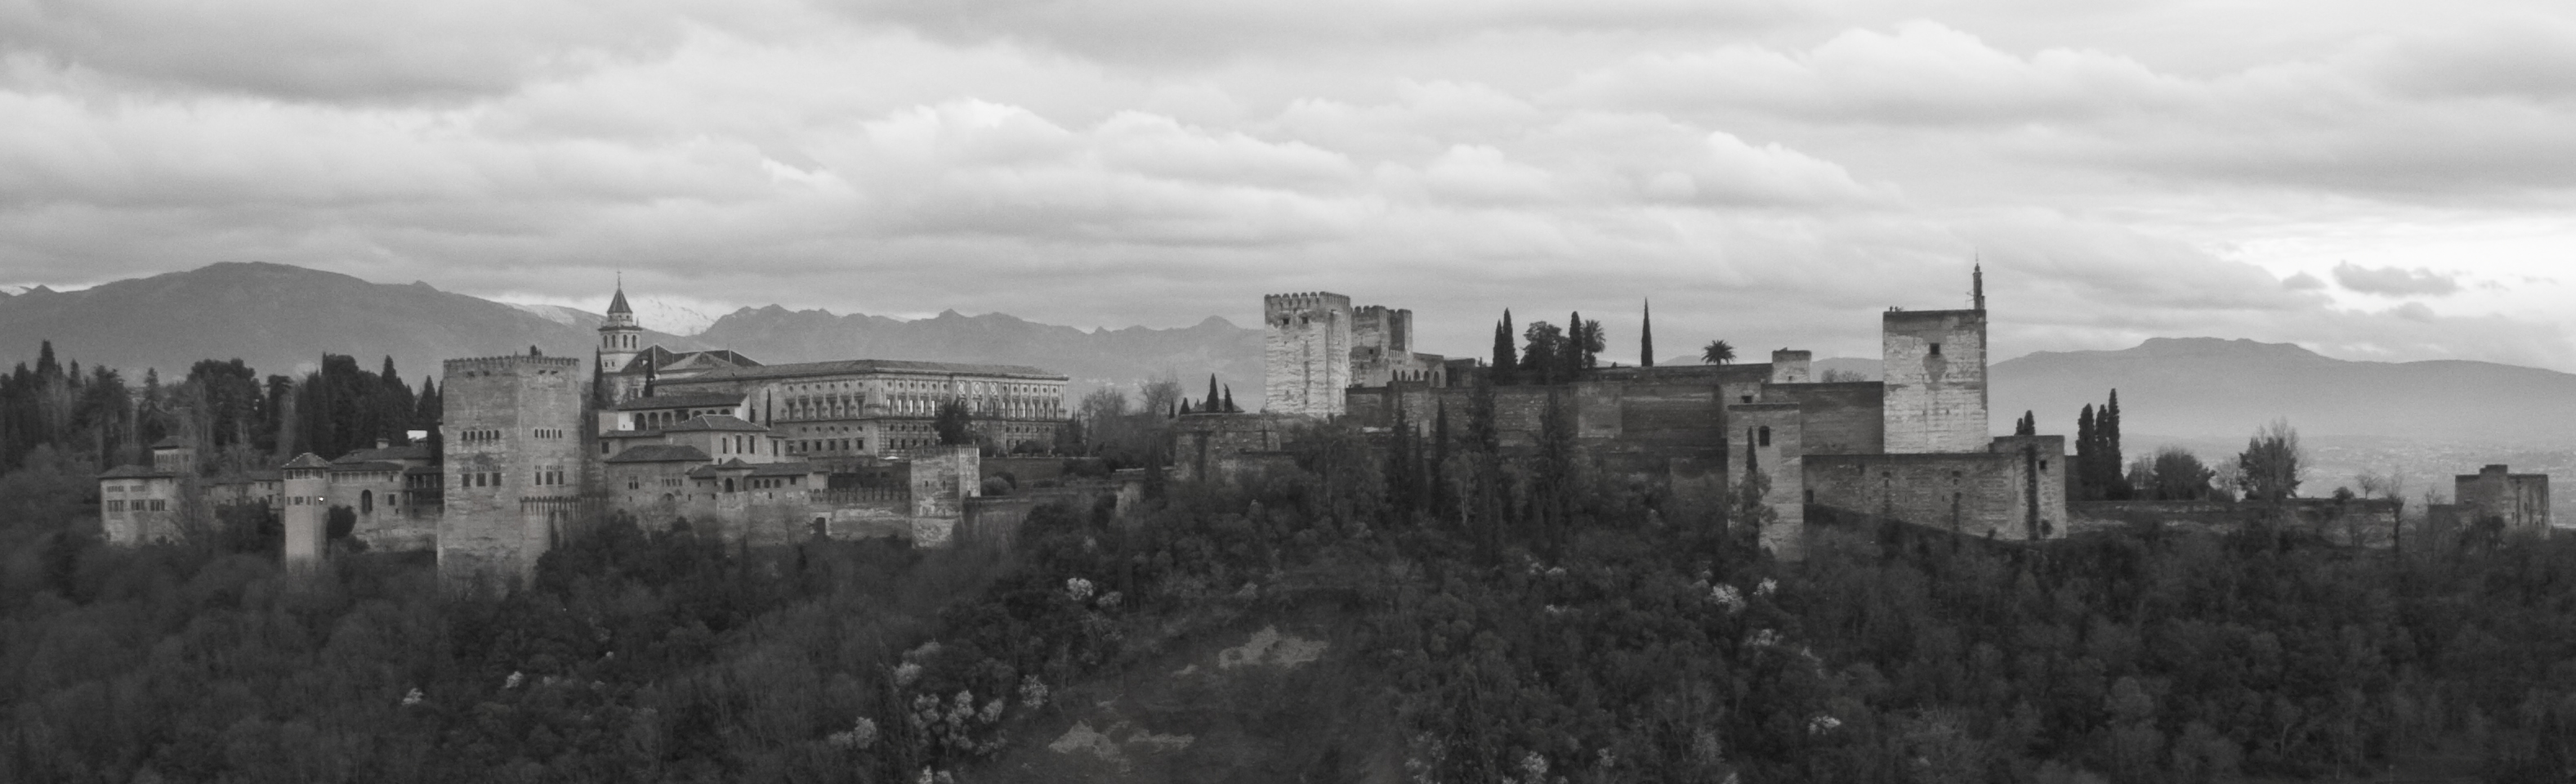 http://yodisparo.files.wordpress.com/2010/03/alhambra-panoramica.jpg